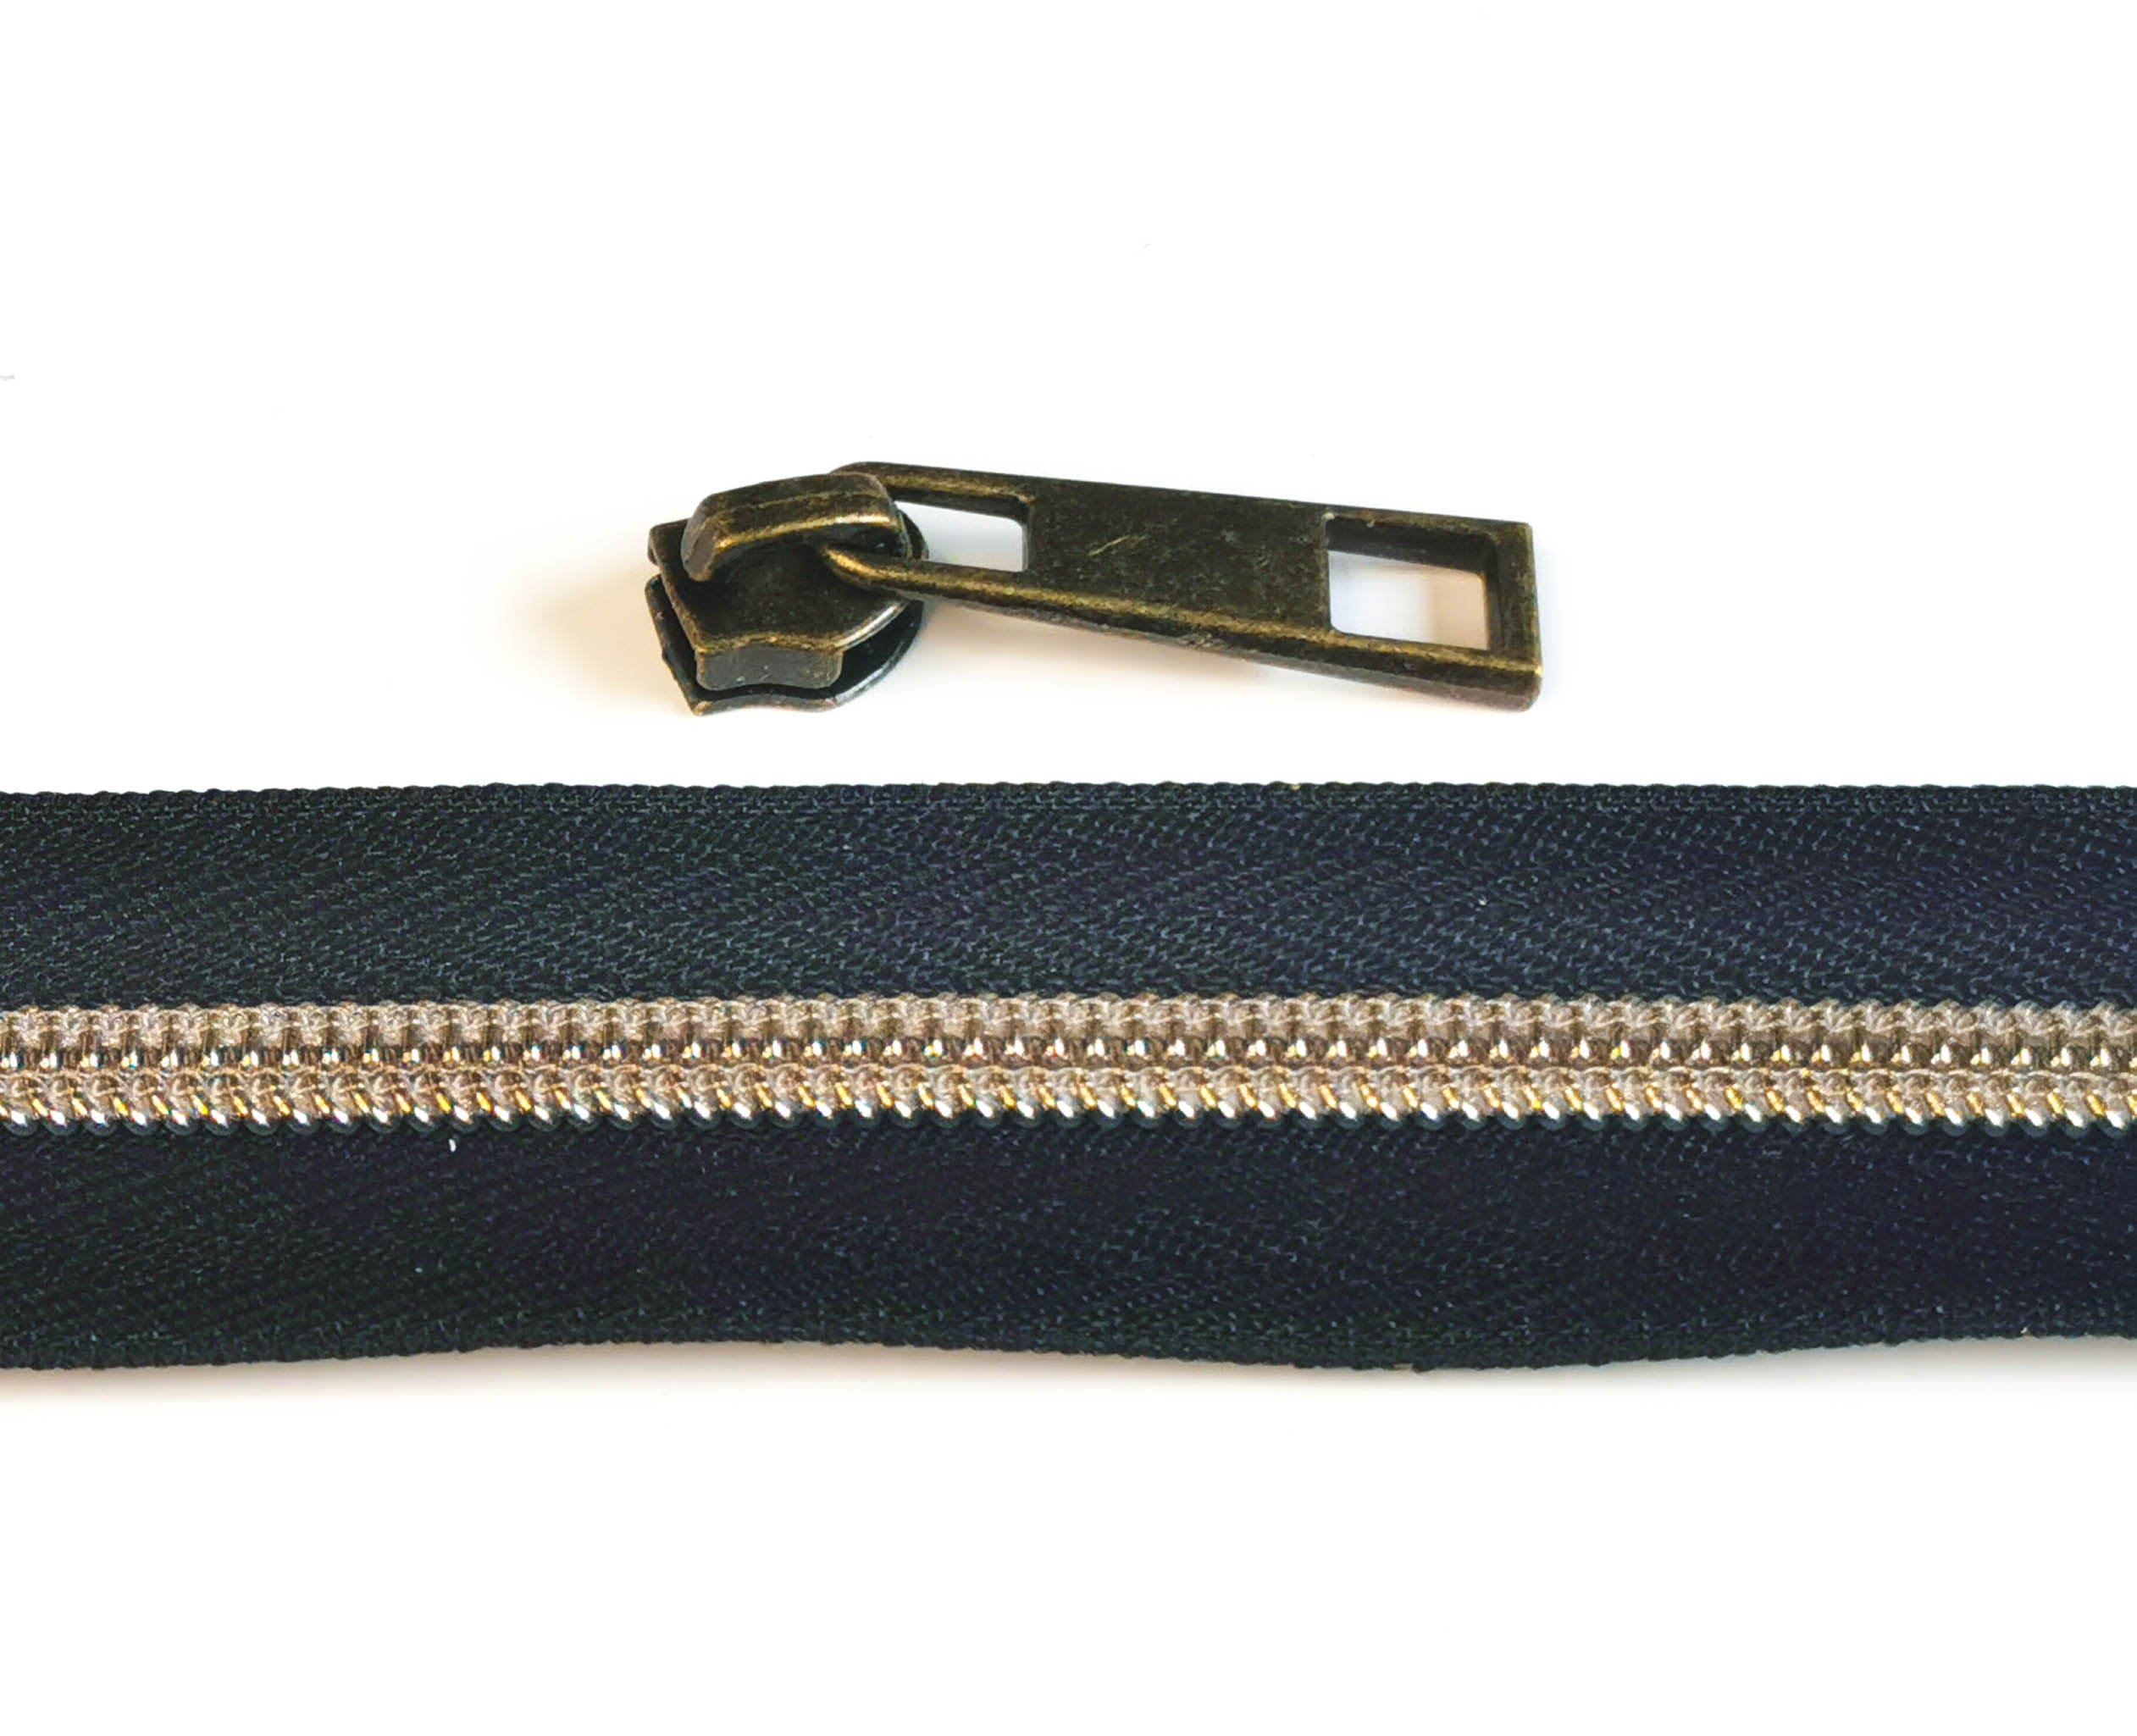 Kiwi Bagineers Zippers Black / Antique Brass Zipper Tape. 30" 76cm of #5 Zipper tape with 2 Zipper Sliders/Pullers By Kiwi Bagineers